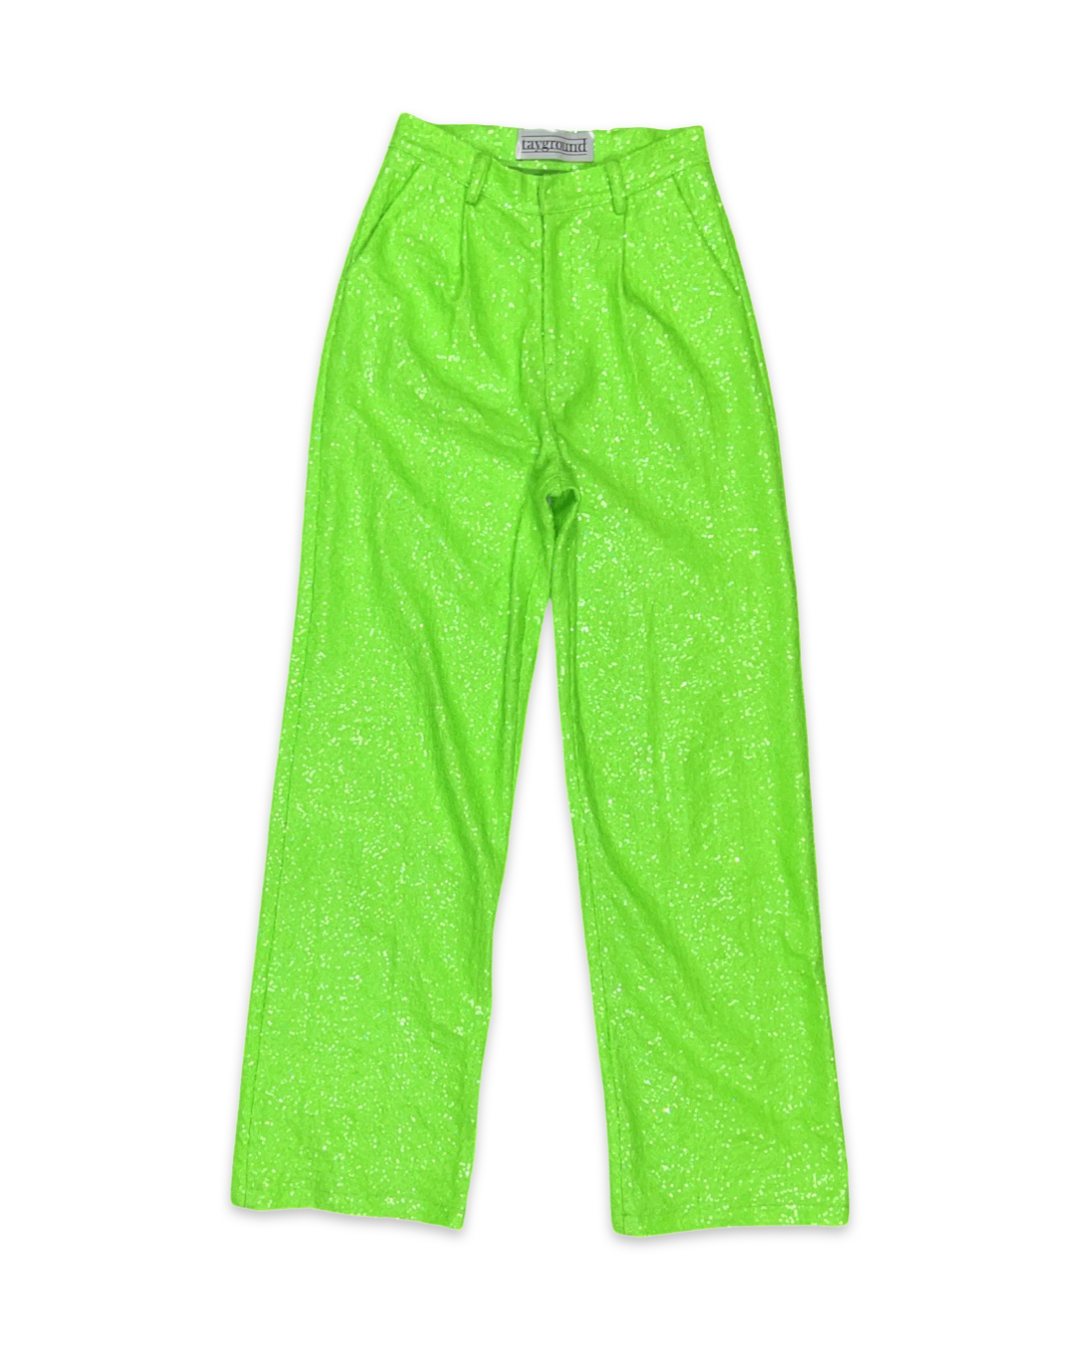 Neon Green Gothic Pant Bondage Baggy Pant Lime Goth Pants Lime Bright Green  Pant | eBay